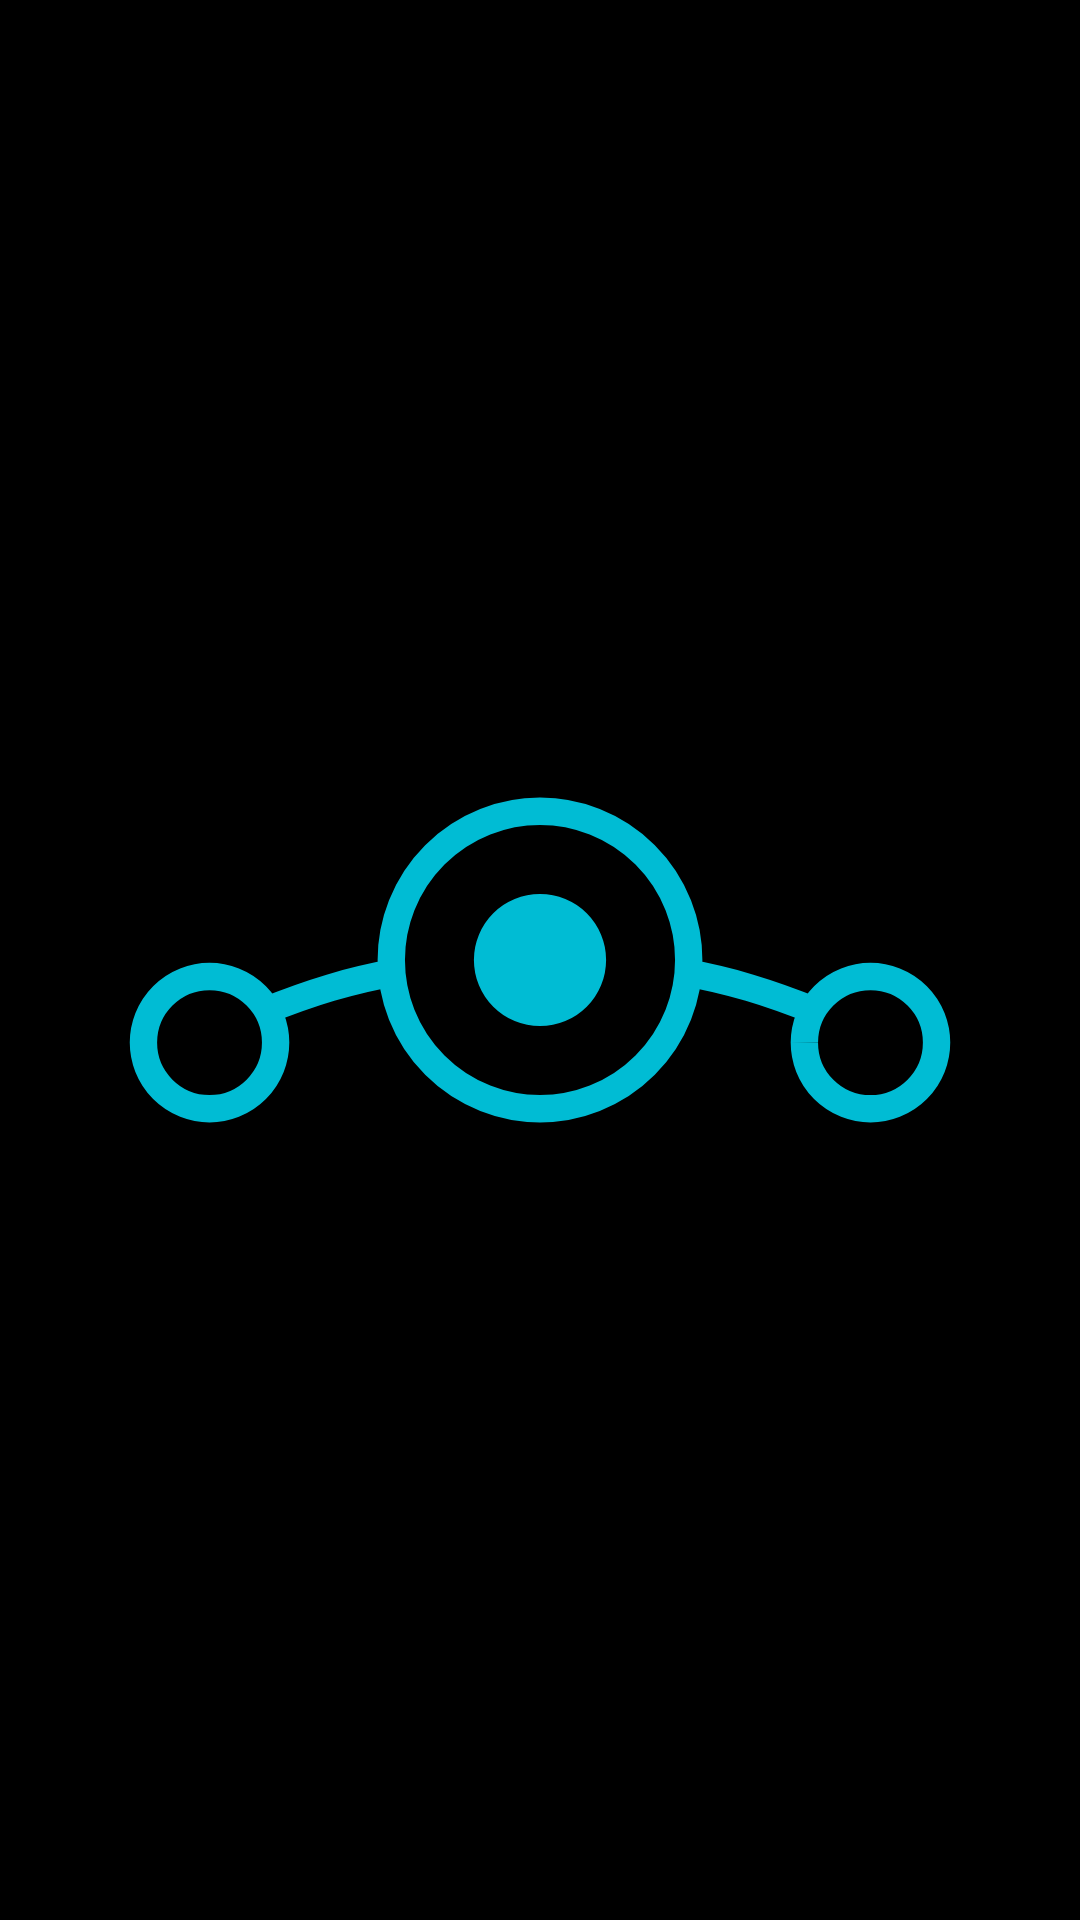 General 1080x1920 black Lineage OS Android (operating system) symbols logo minimalism cyan digital